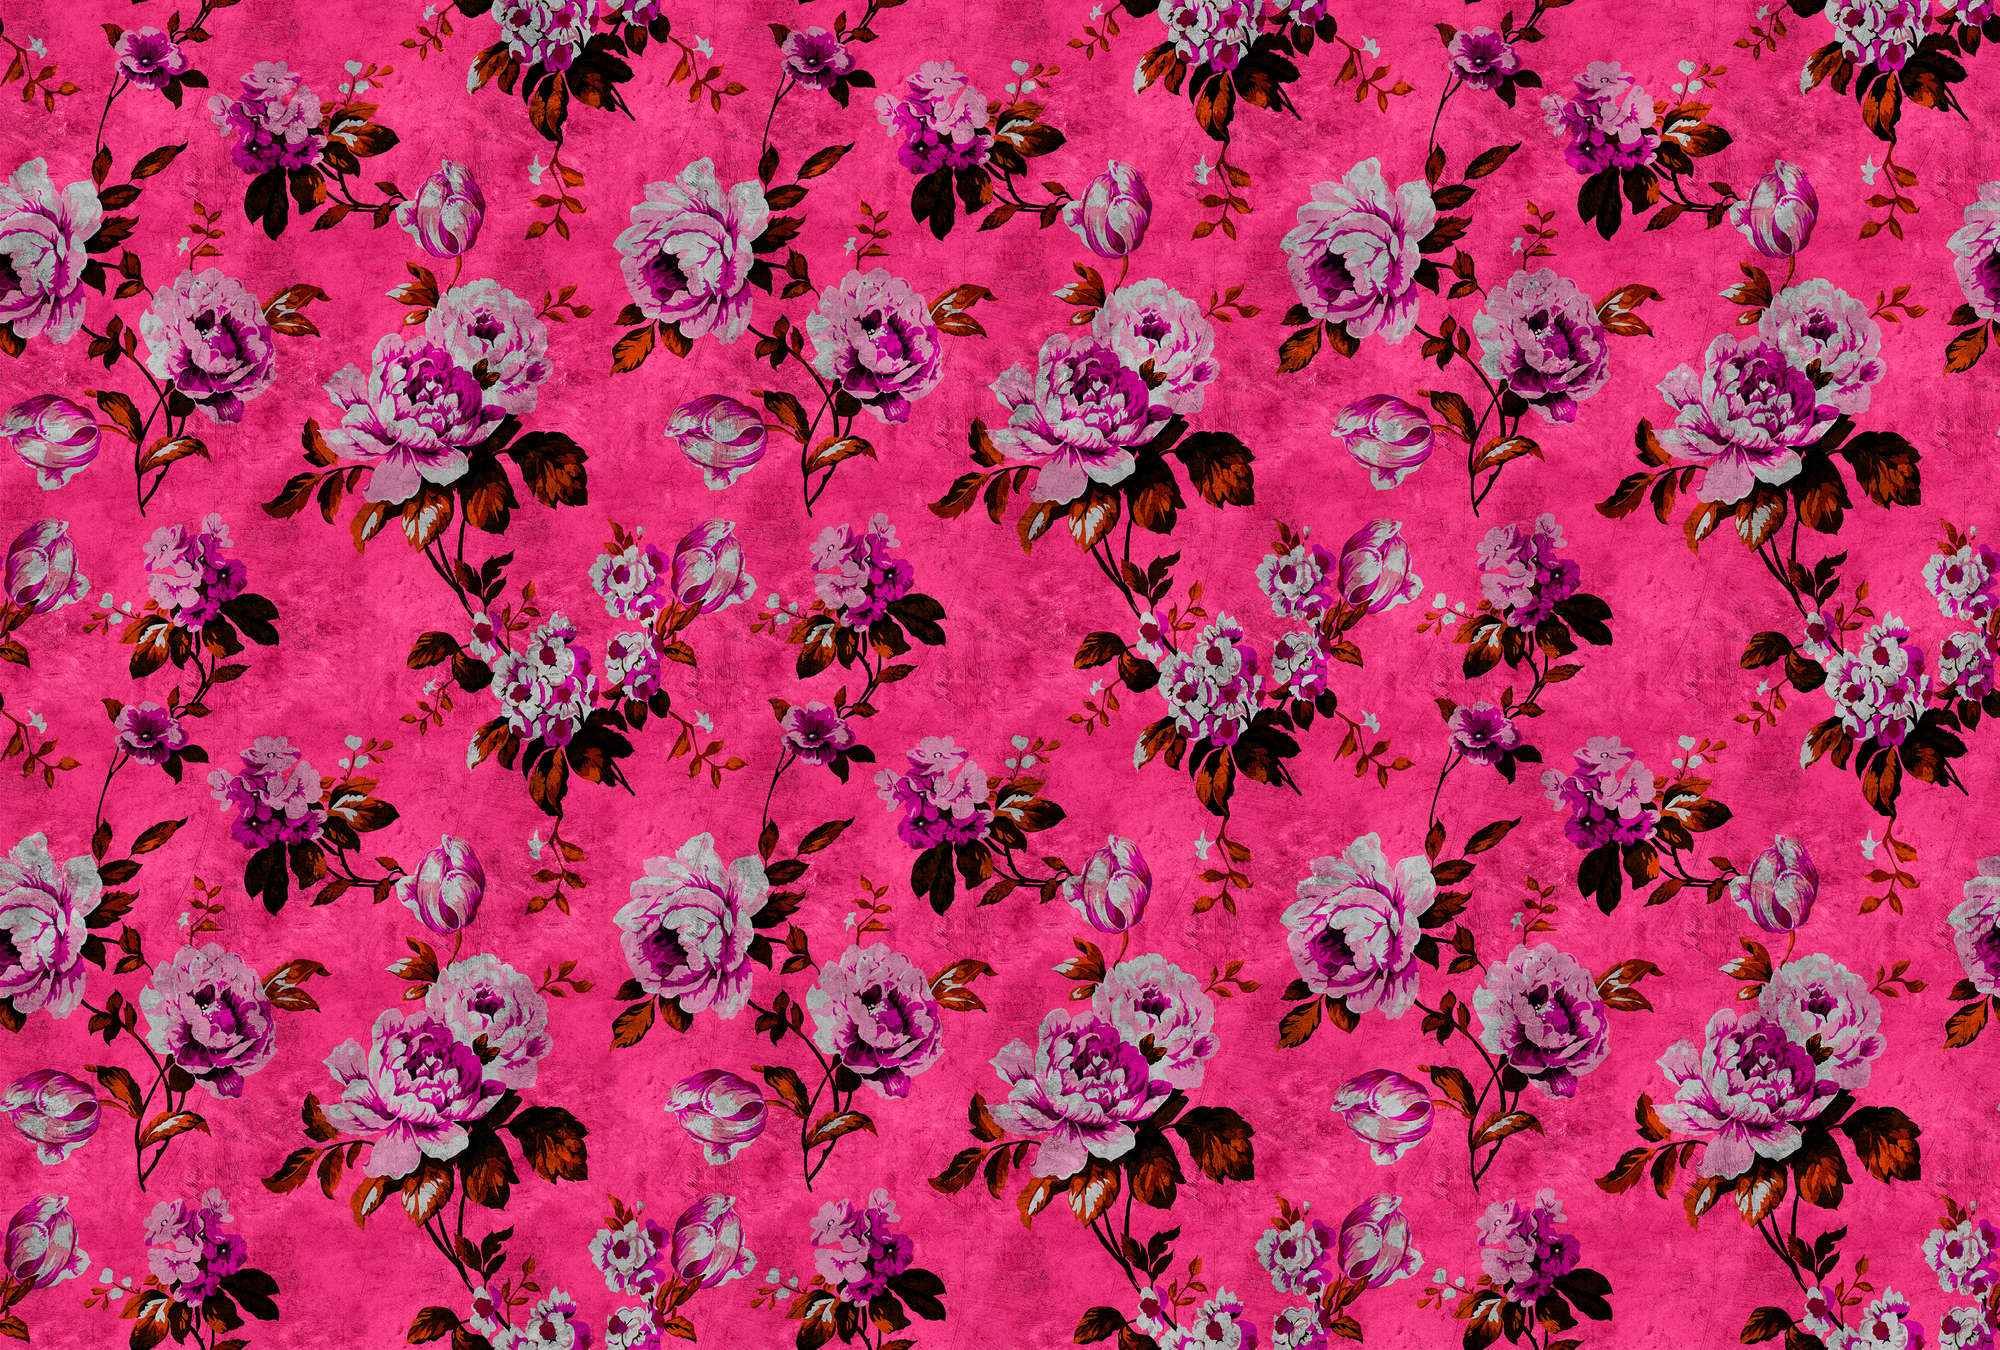             Wild roses 3 - Rosen Fototapete im Retrolook, Pink- Kratzer Struktur – Rosa, Rot | Struktur Vlies
        